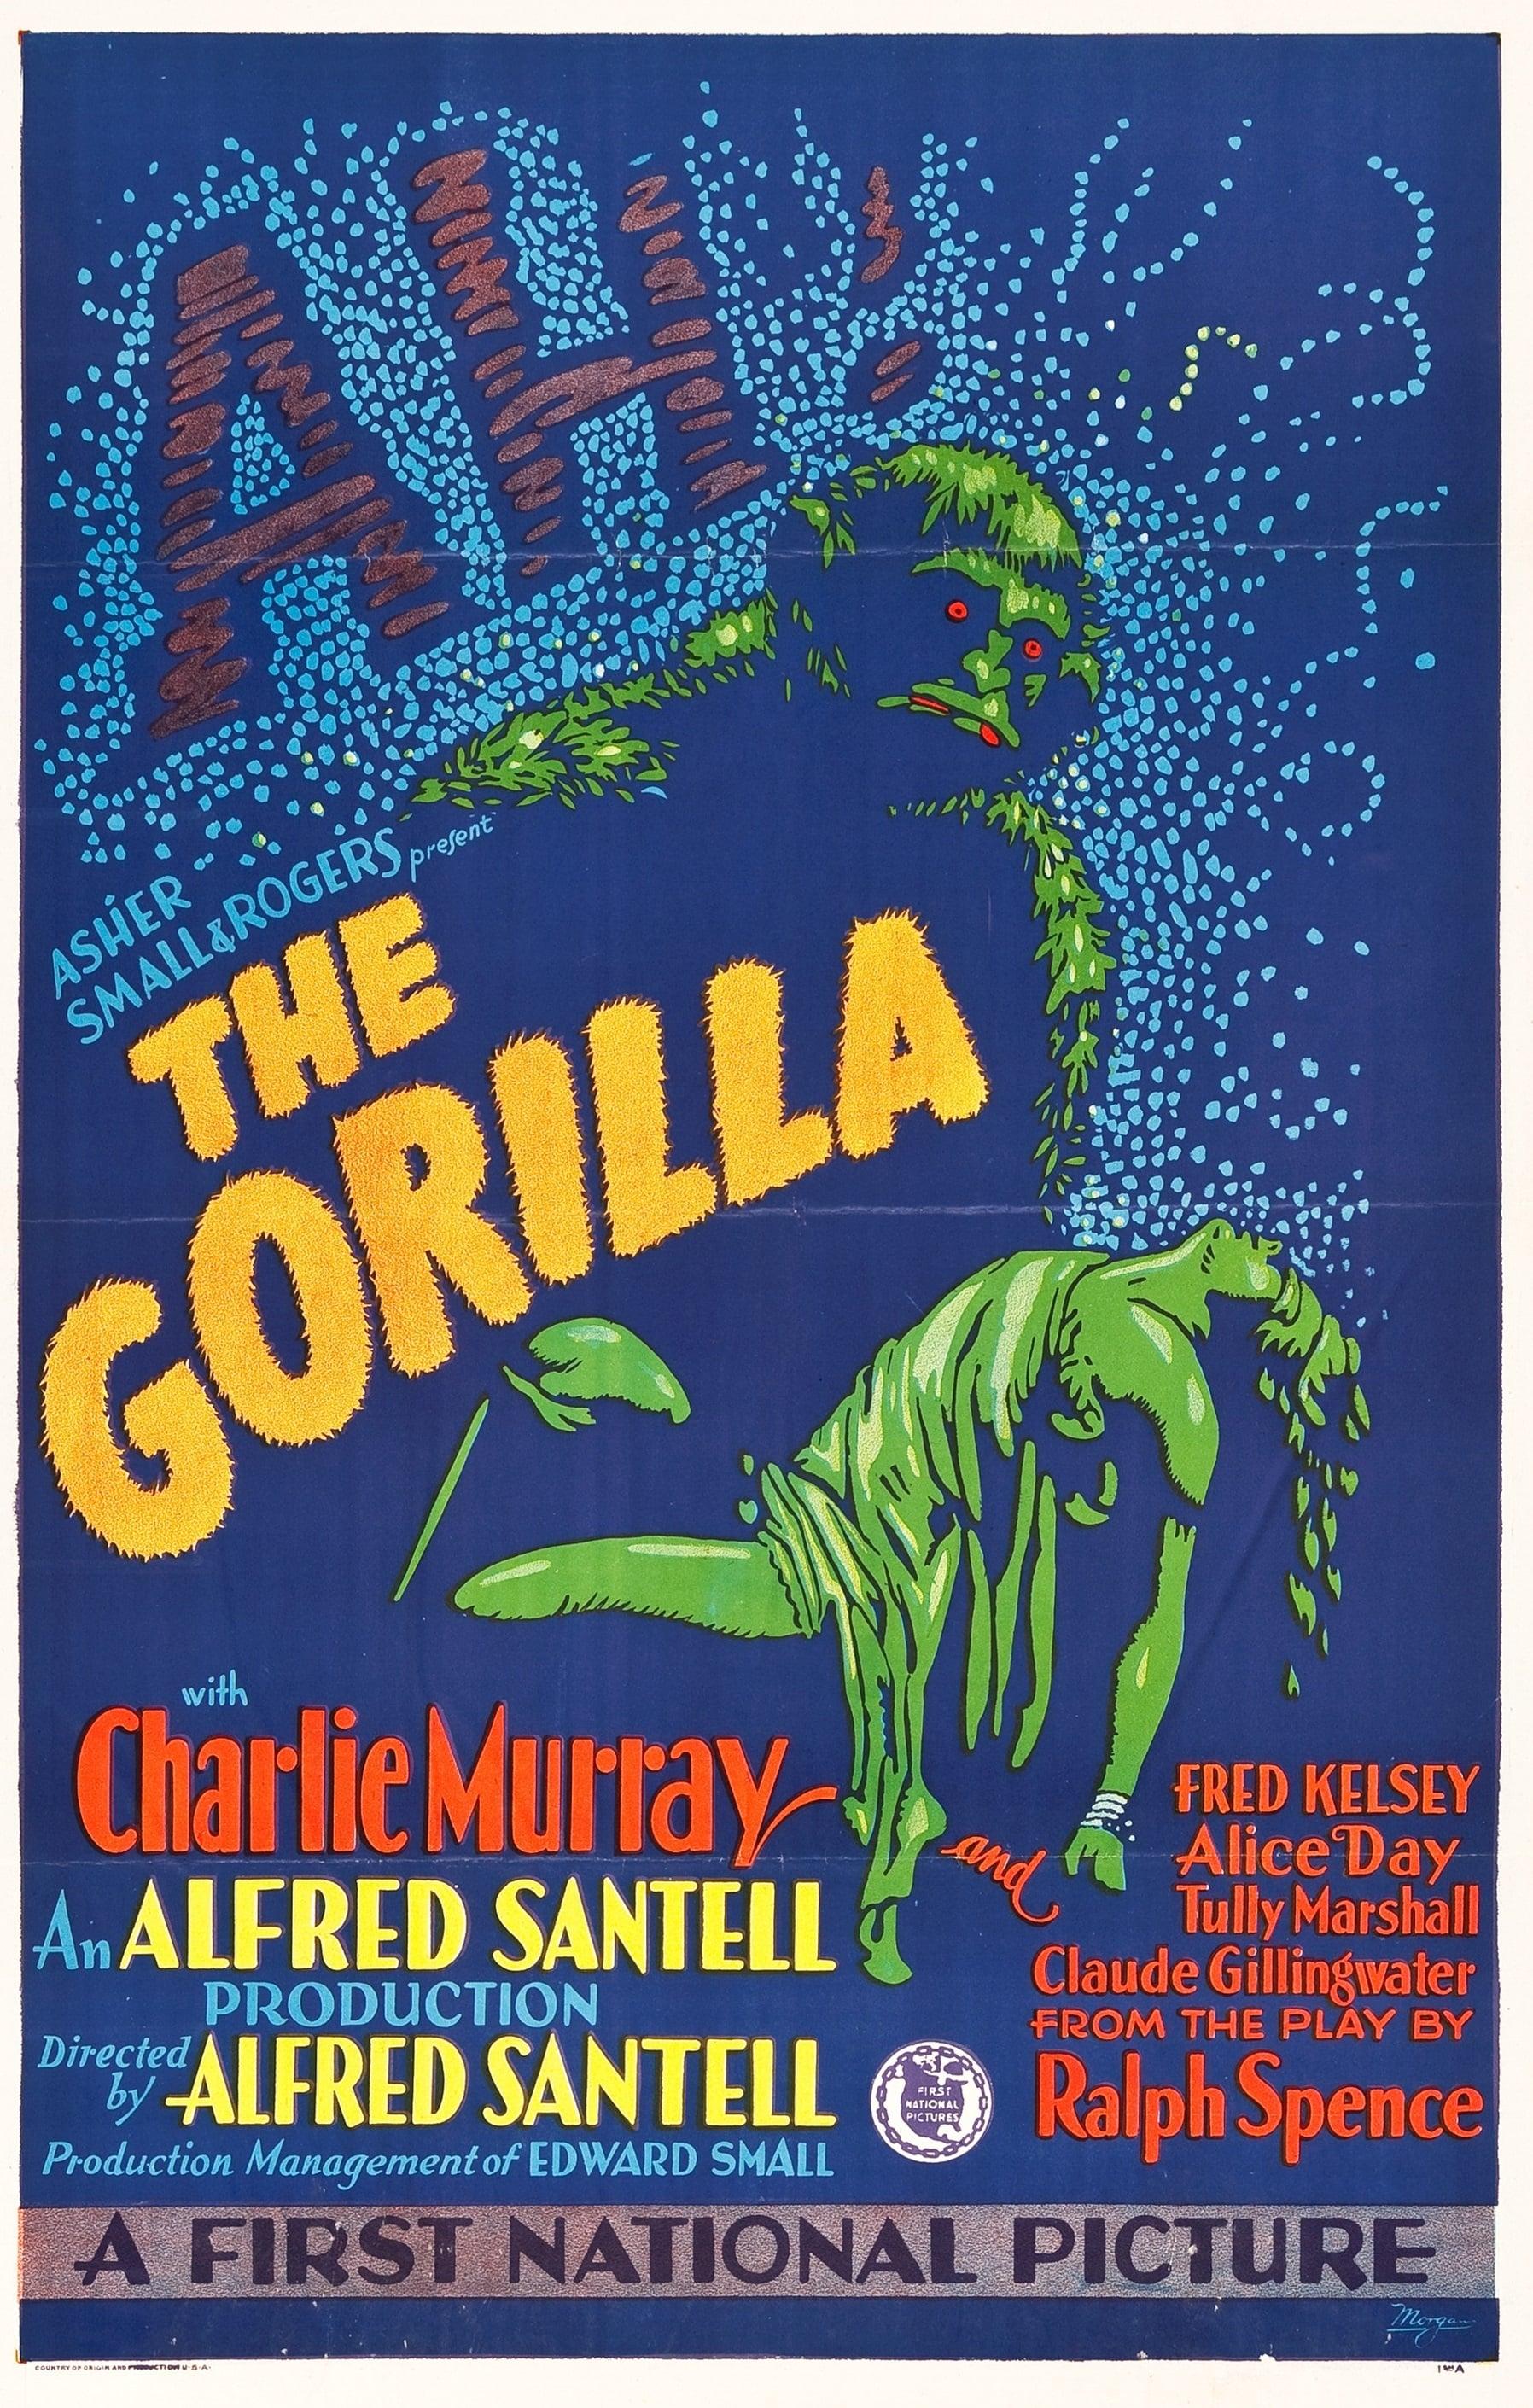 The Gorilla poster